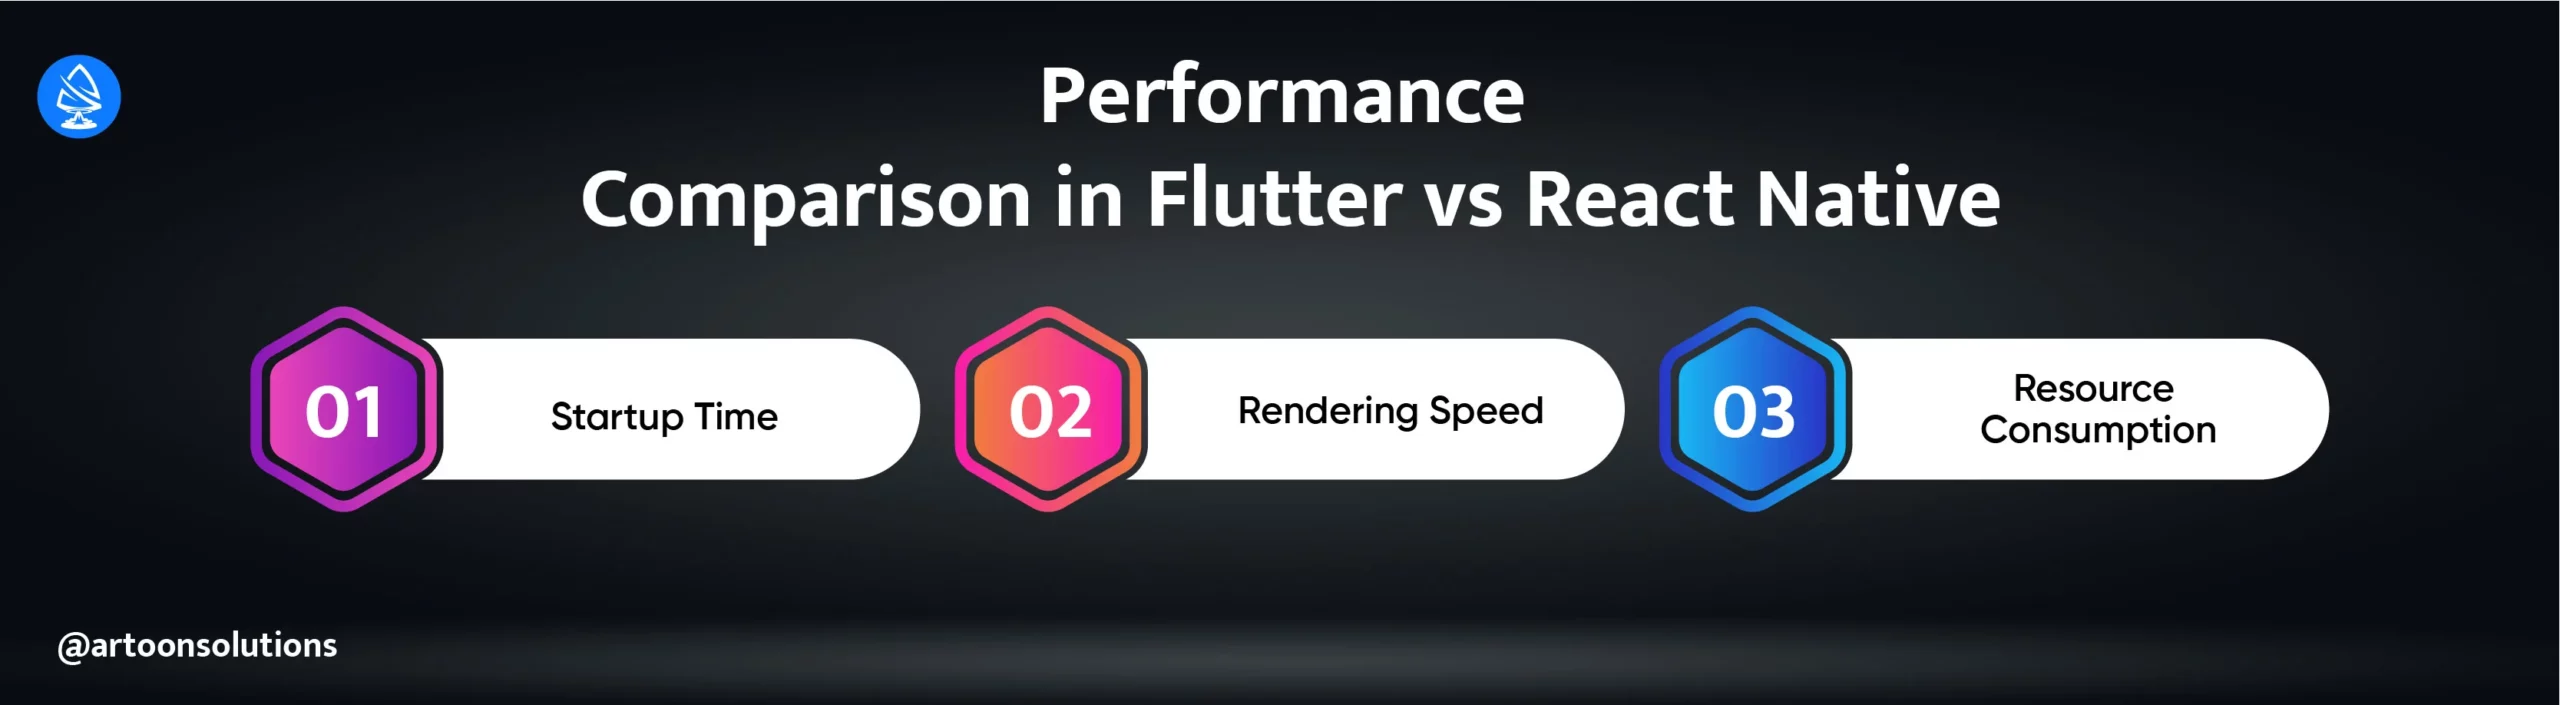 Performance Comparison in Flutter vs React Native